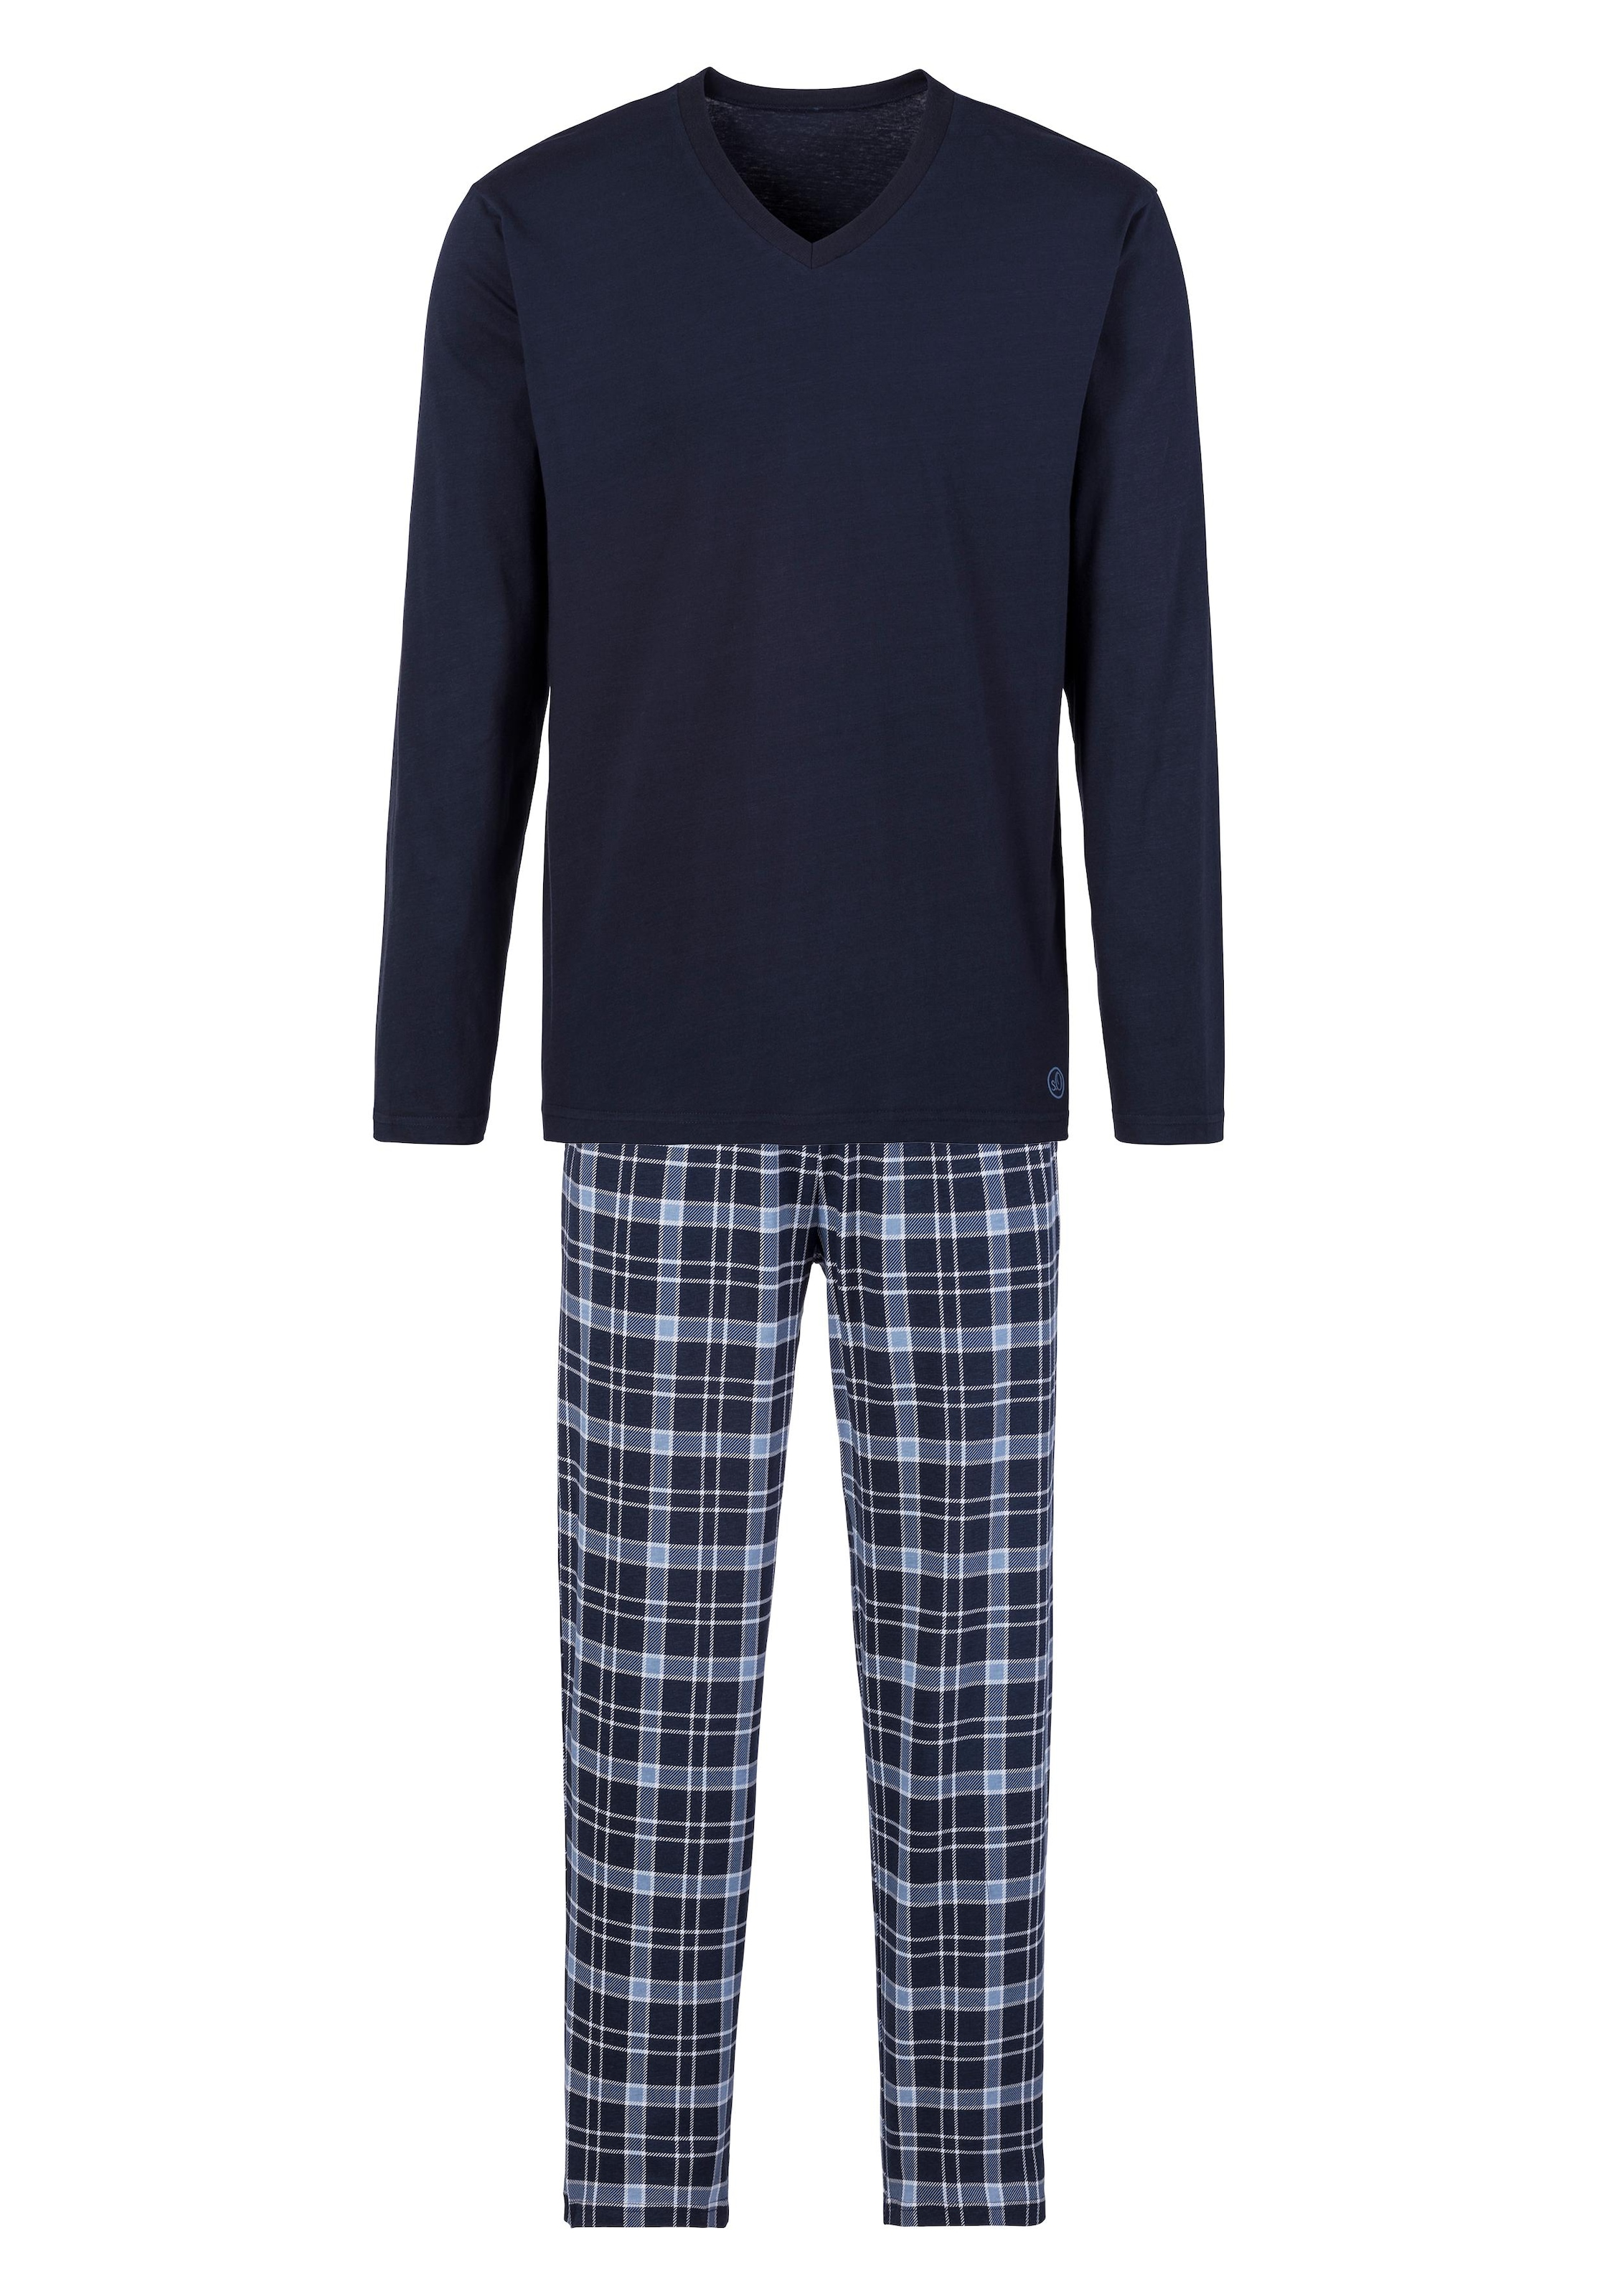 Pyjama, (2 tlg., 1 Stück), mit Karo-Hose